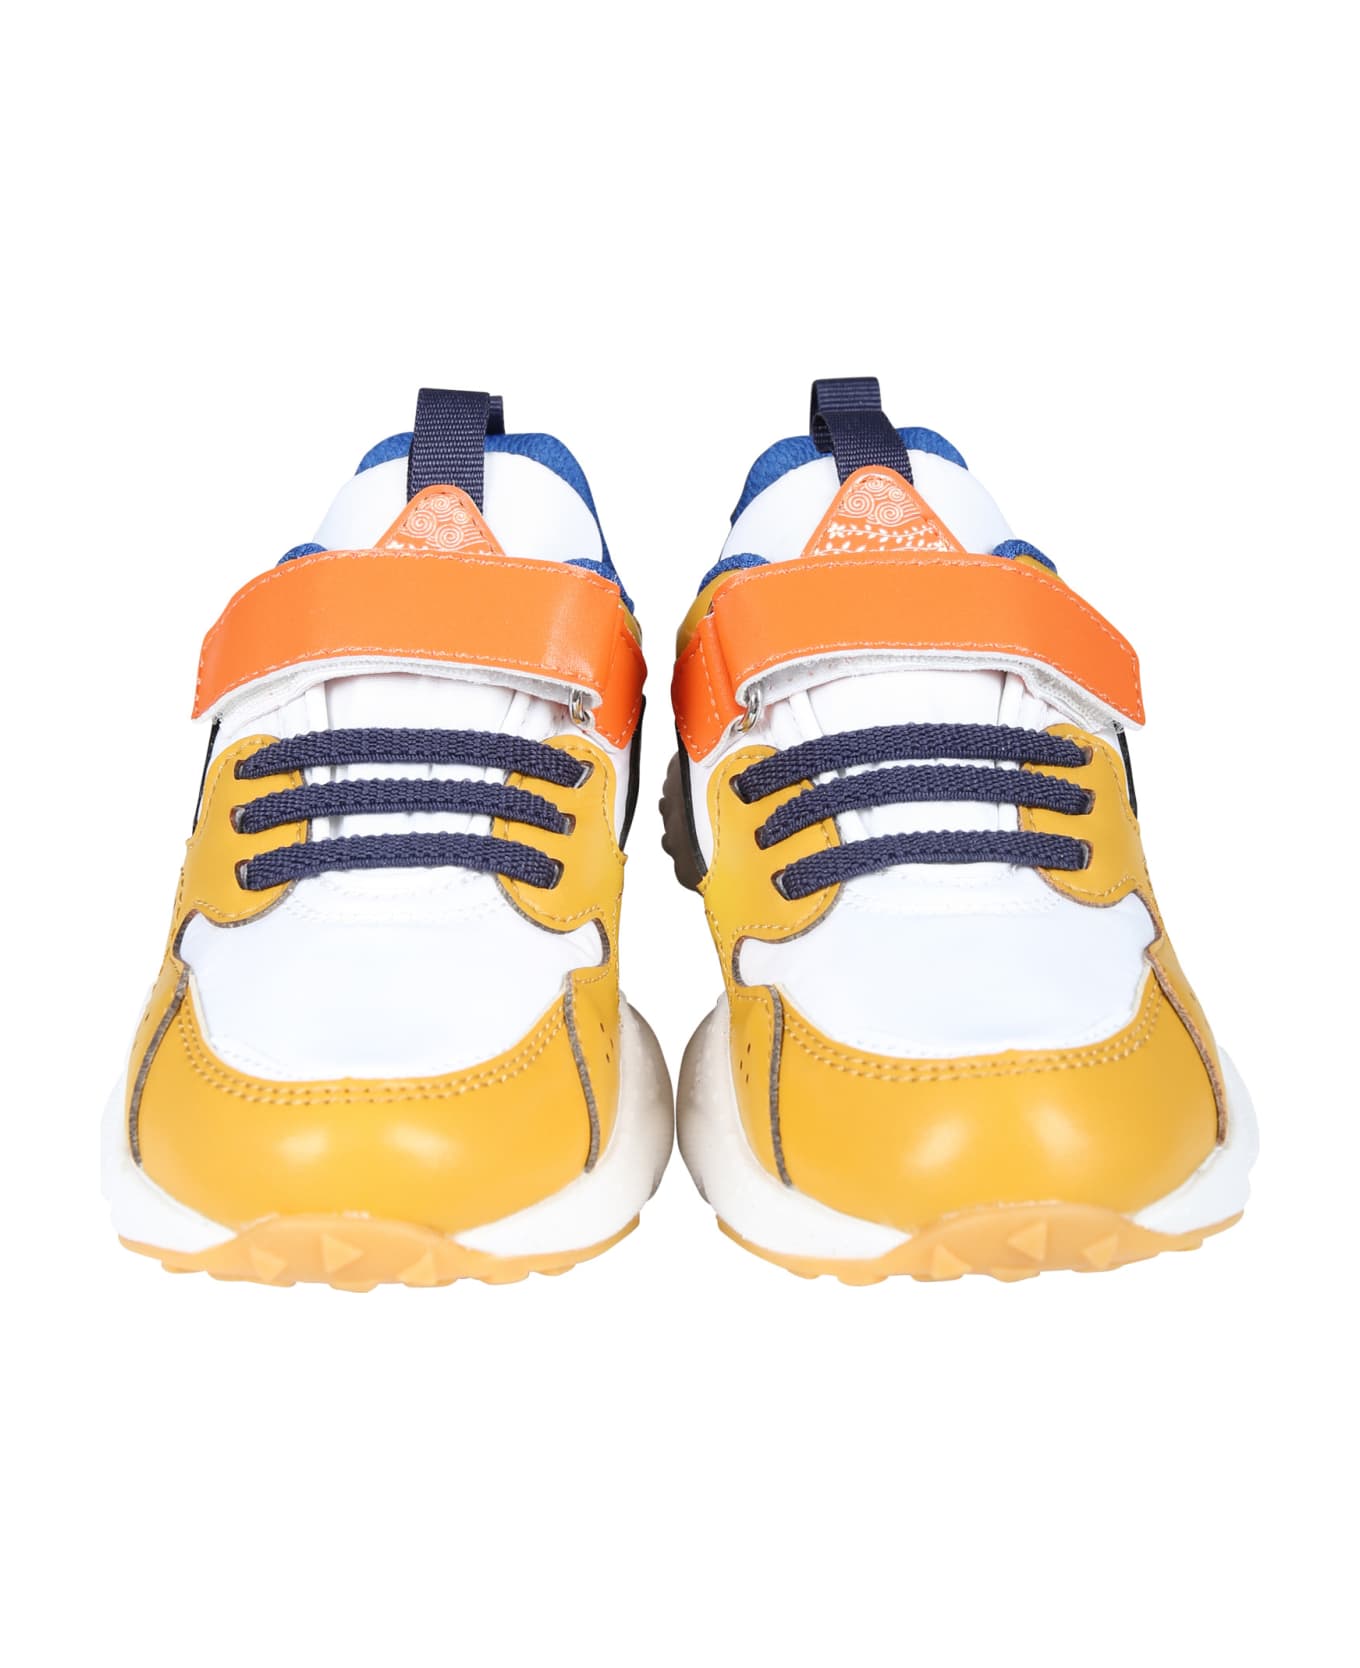 Flower Mountain Orange Yamano Low Sneakers For Boy - Orange